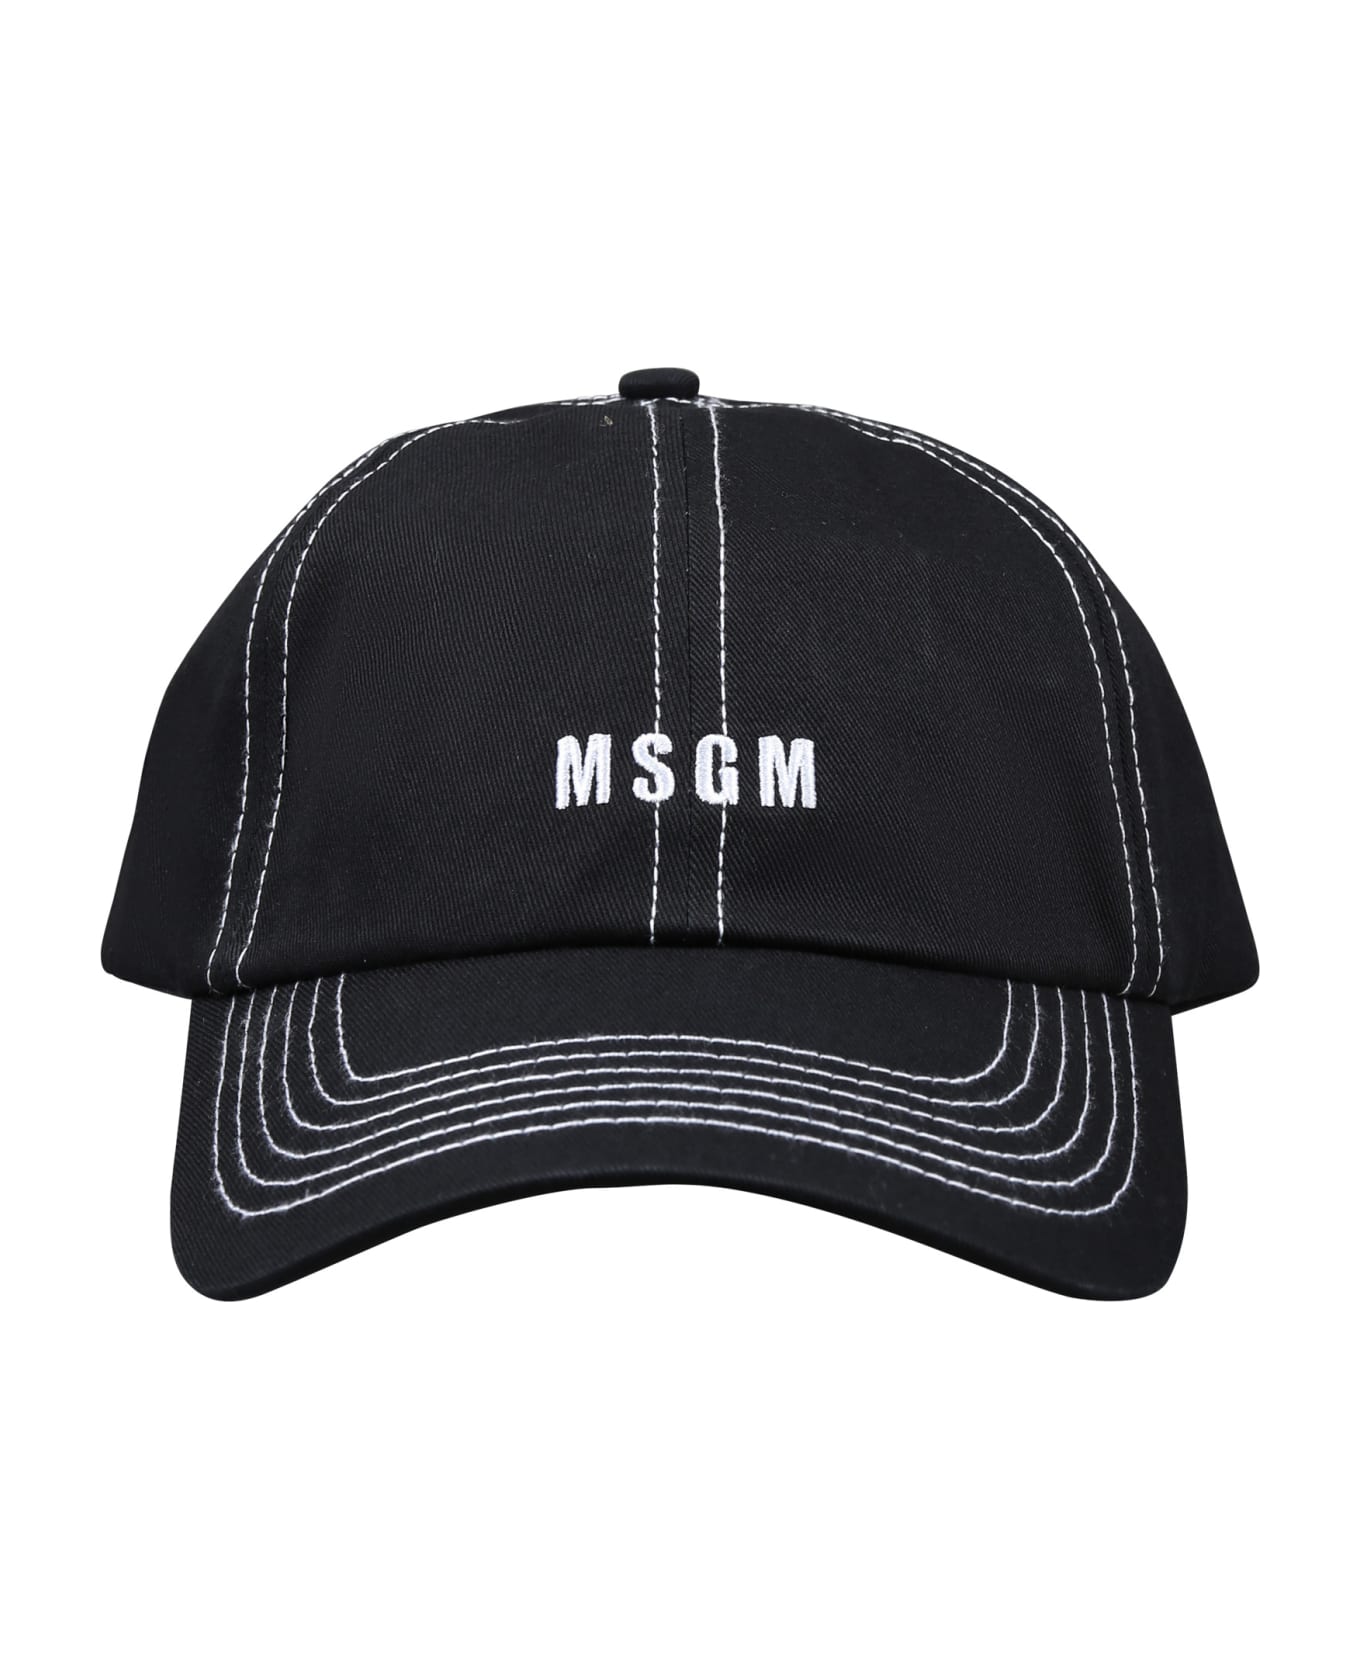 MSGM Black Hat With Visor For Boy - Black